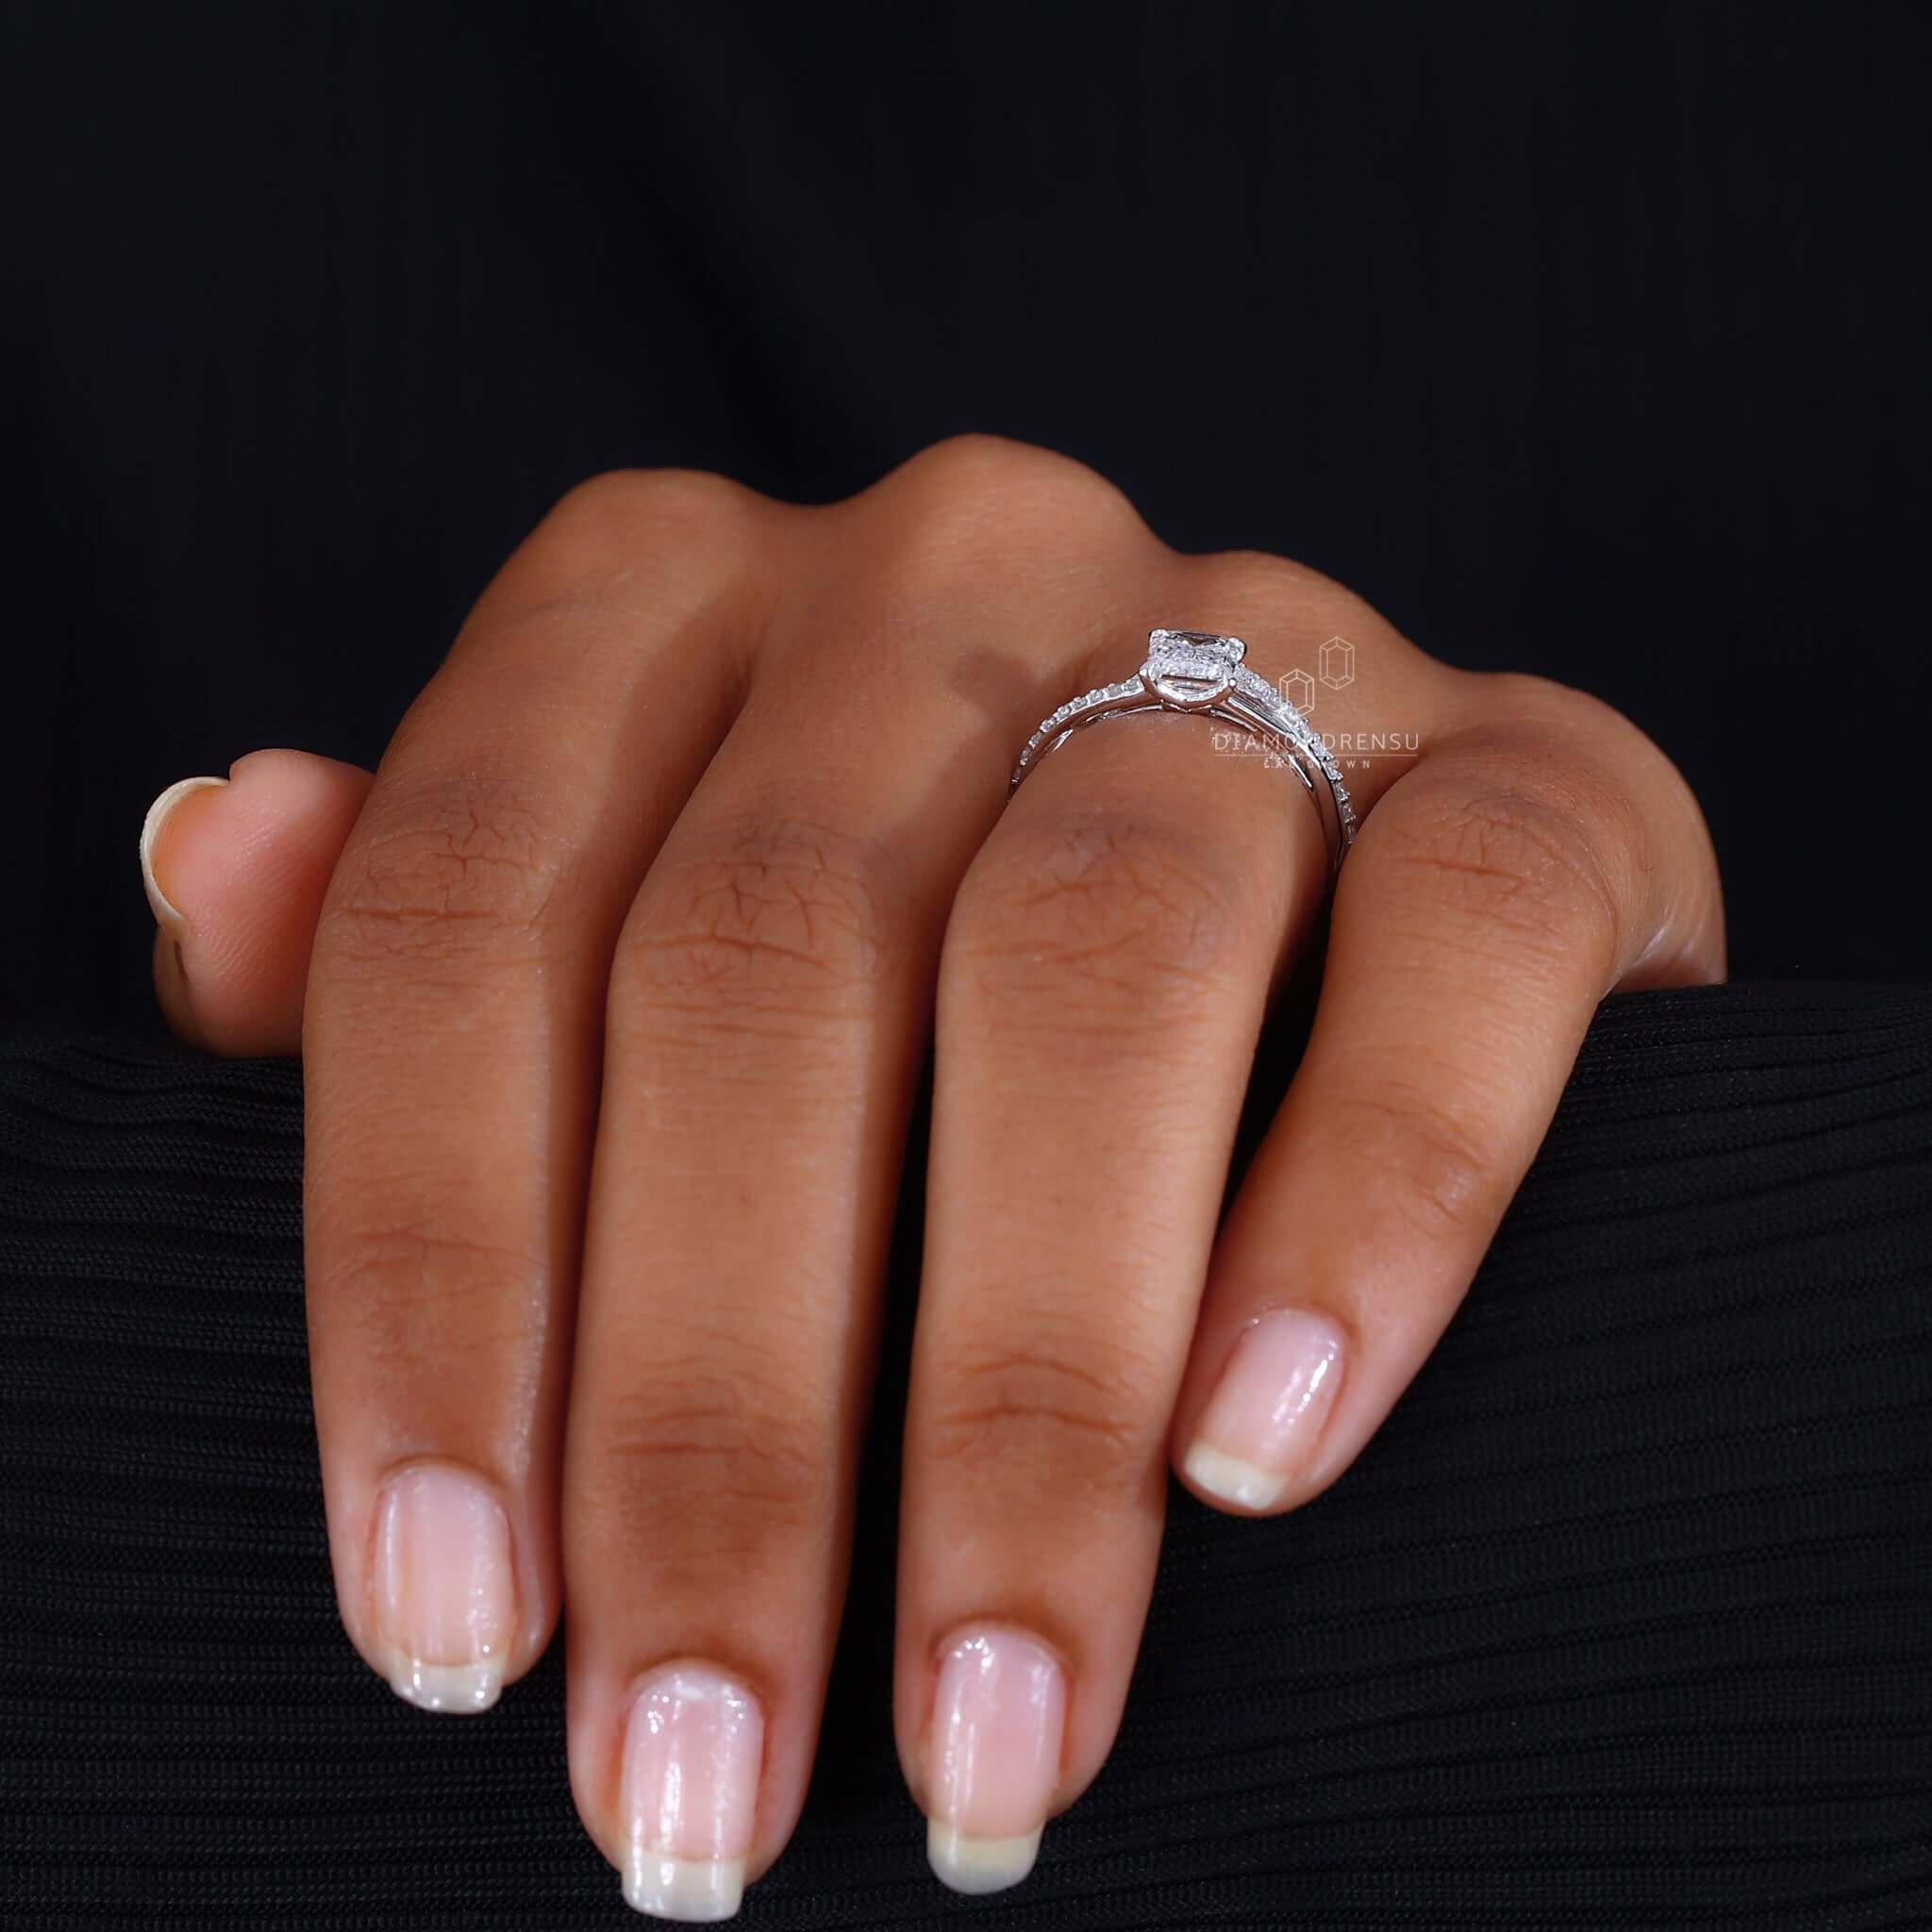 Woman's hand wearing an emerald cut diamond engagement ring, showcasing its timeless elegance